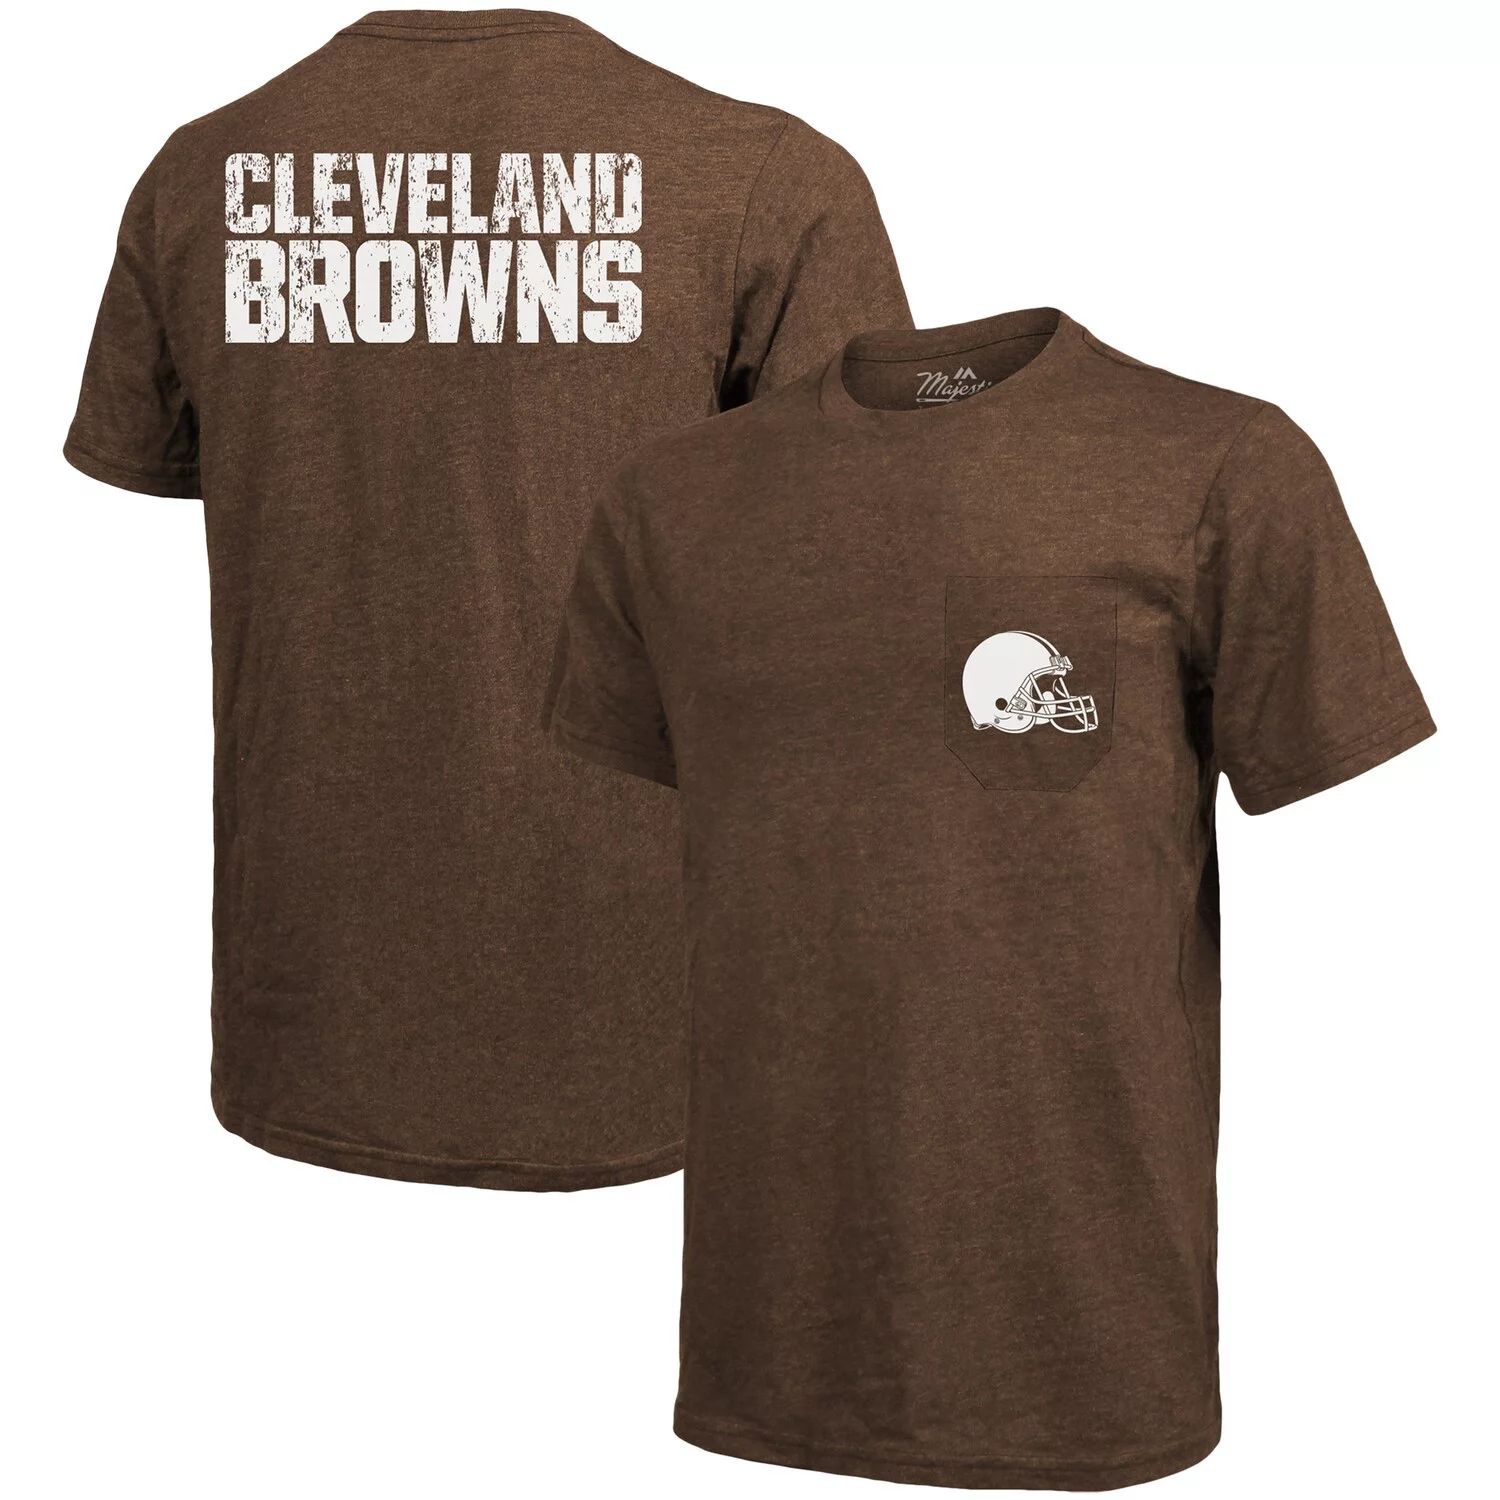 Футболка с карманами Tri-Blend Threads Cleveland Browns - Коричневый Majestic футболка с карманами tri blend threads detroit lions синяя majestic